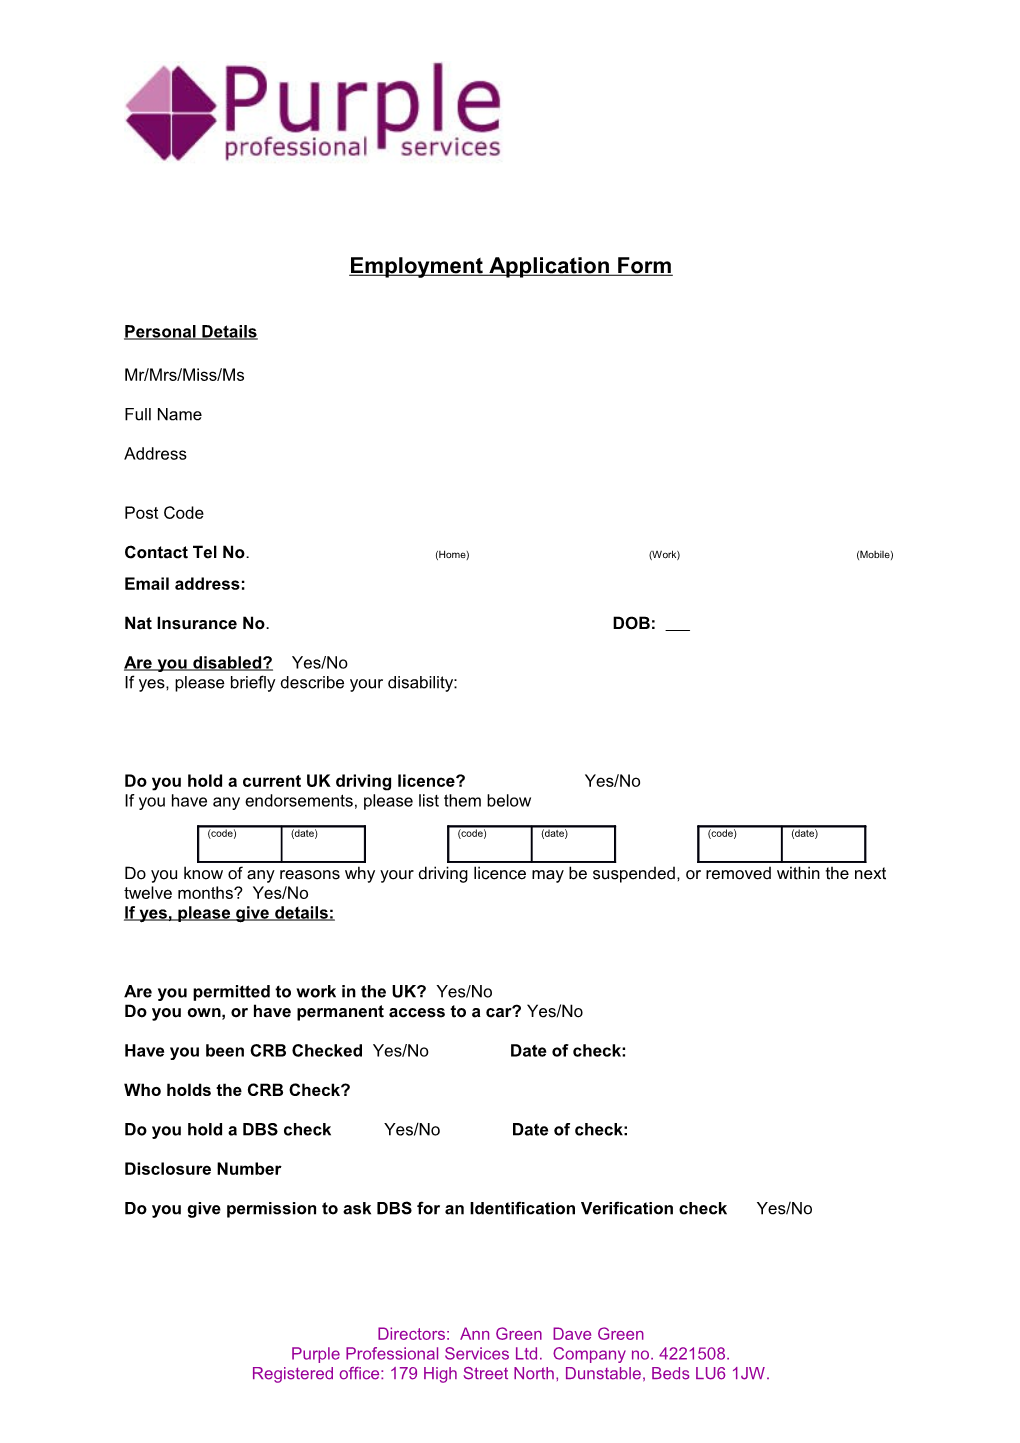 Employment Application Form s3